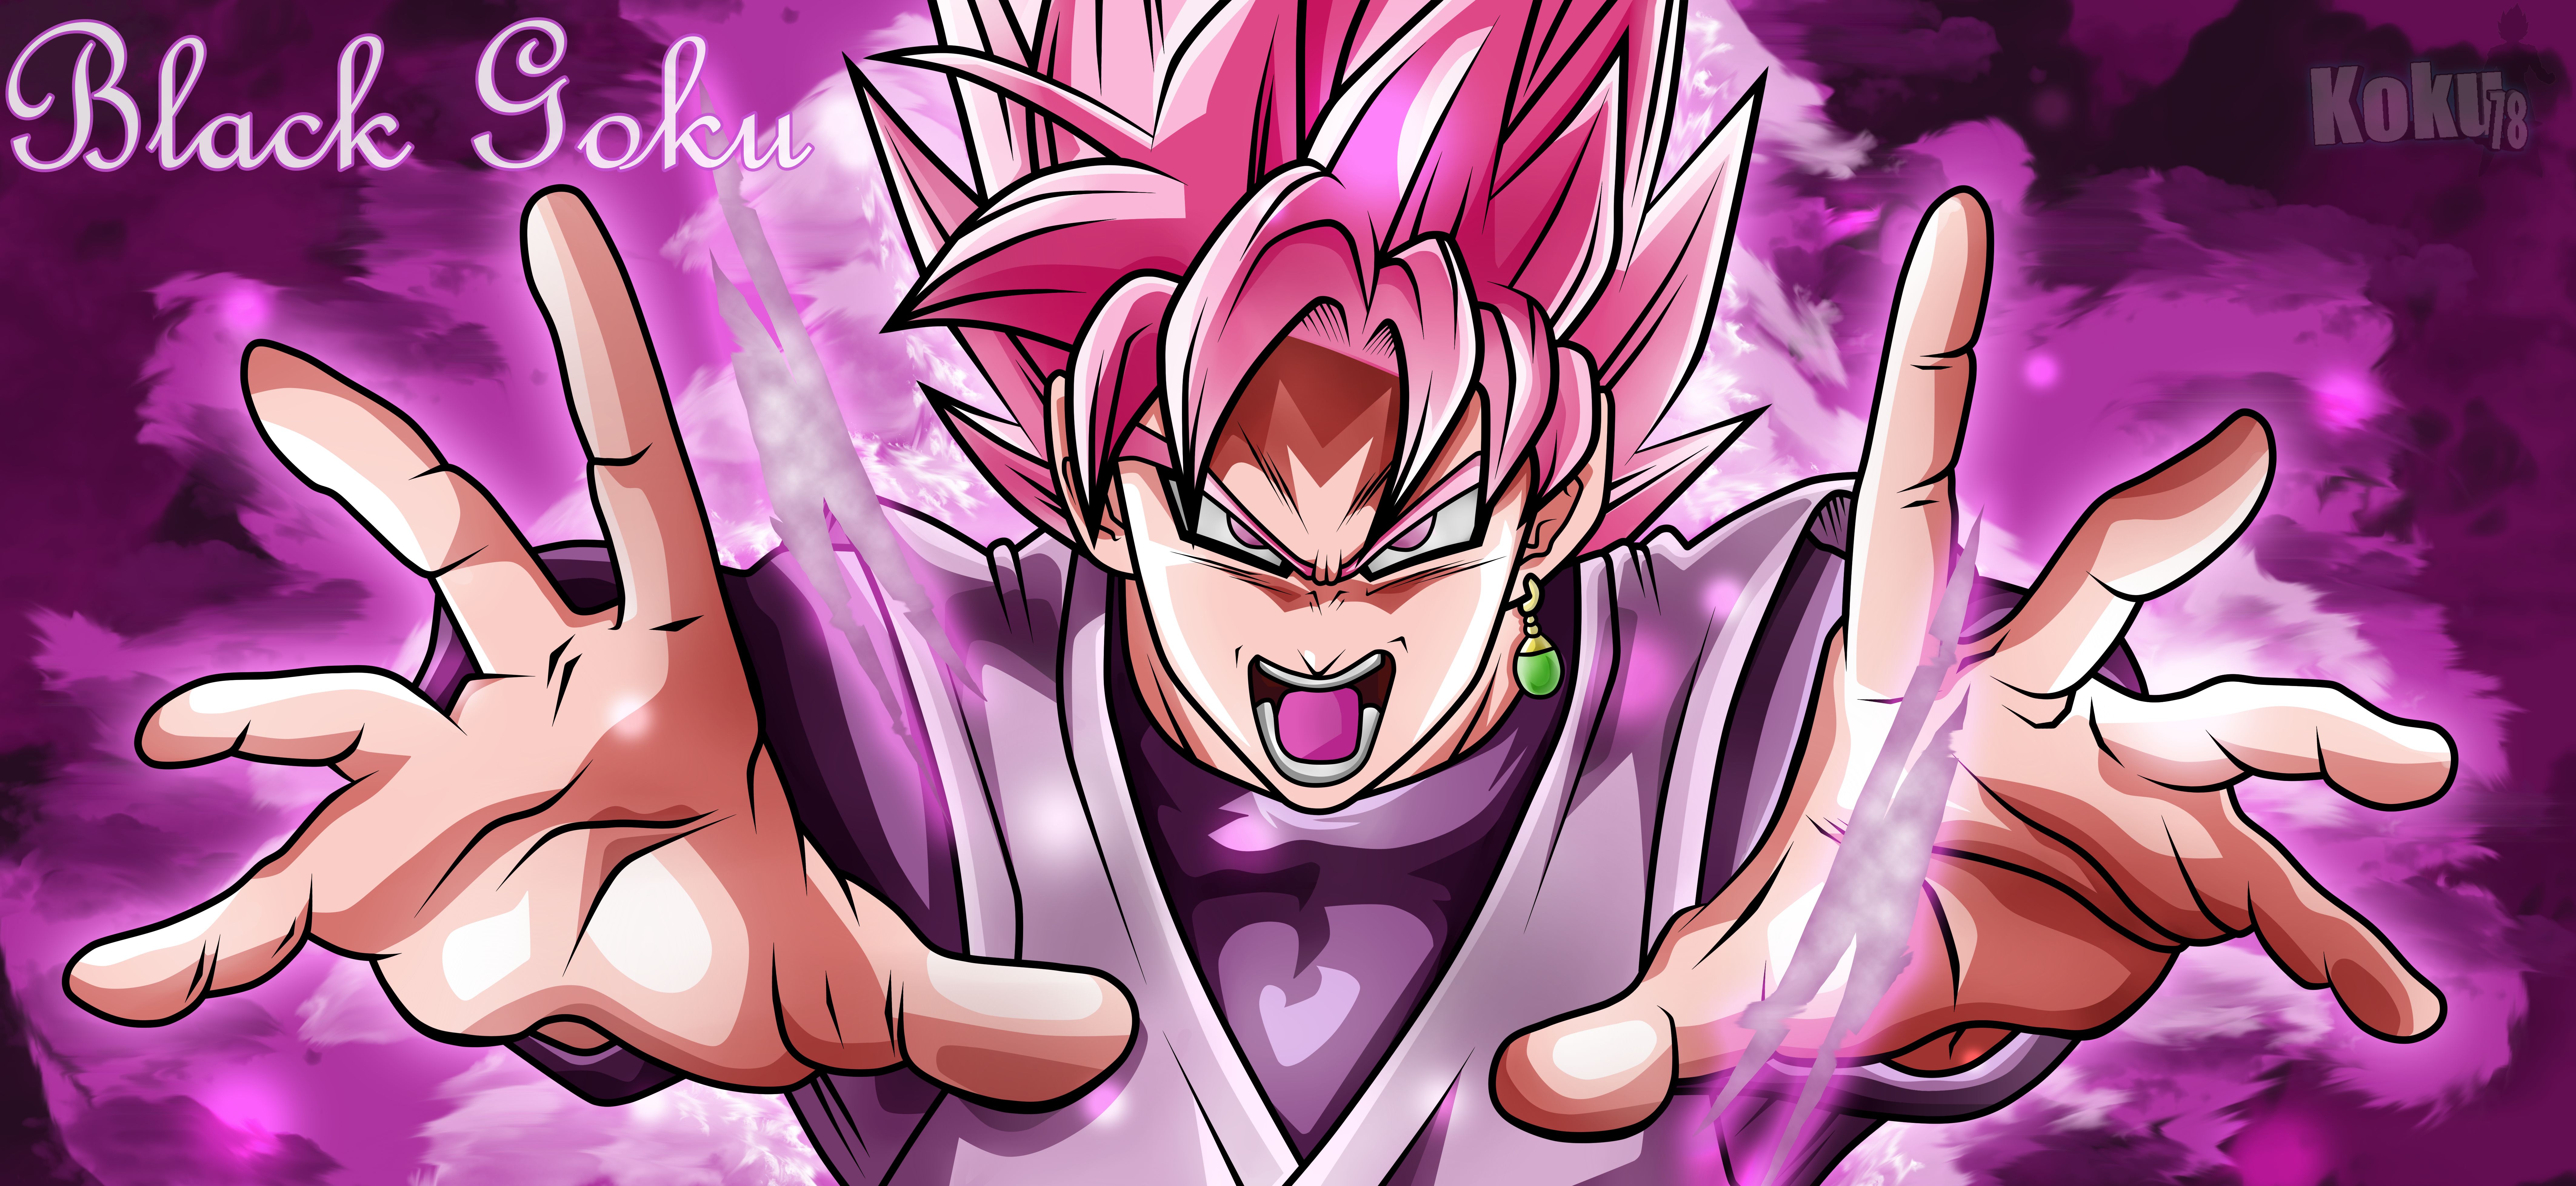 Wallpaper ID 583374  Dragon Ball Black Goku Super Saiyan Rosé Dragon  Ball Super 4K free download